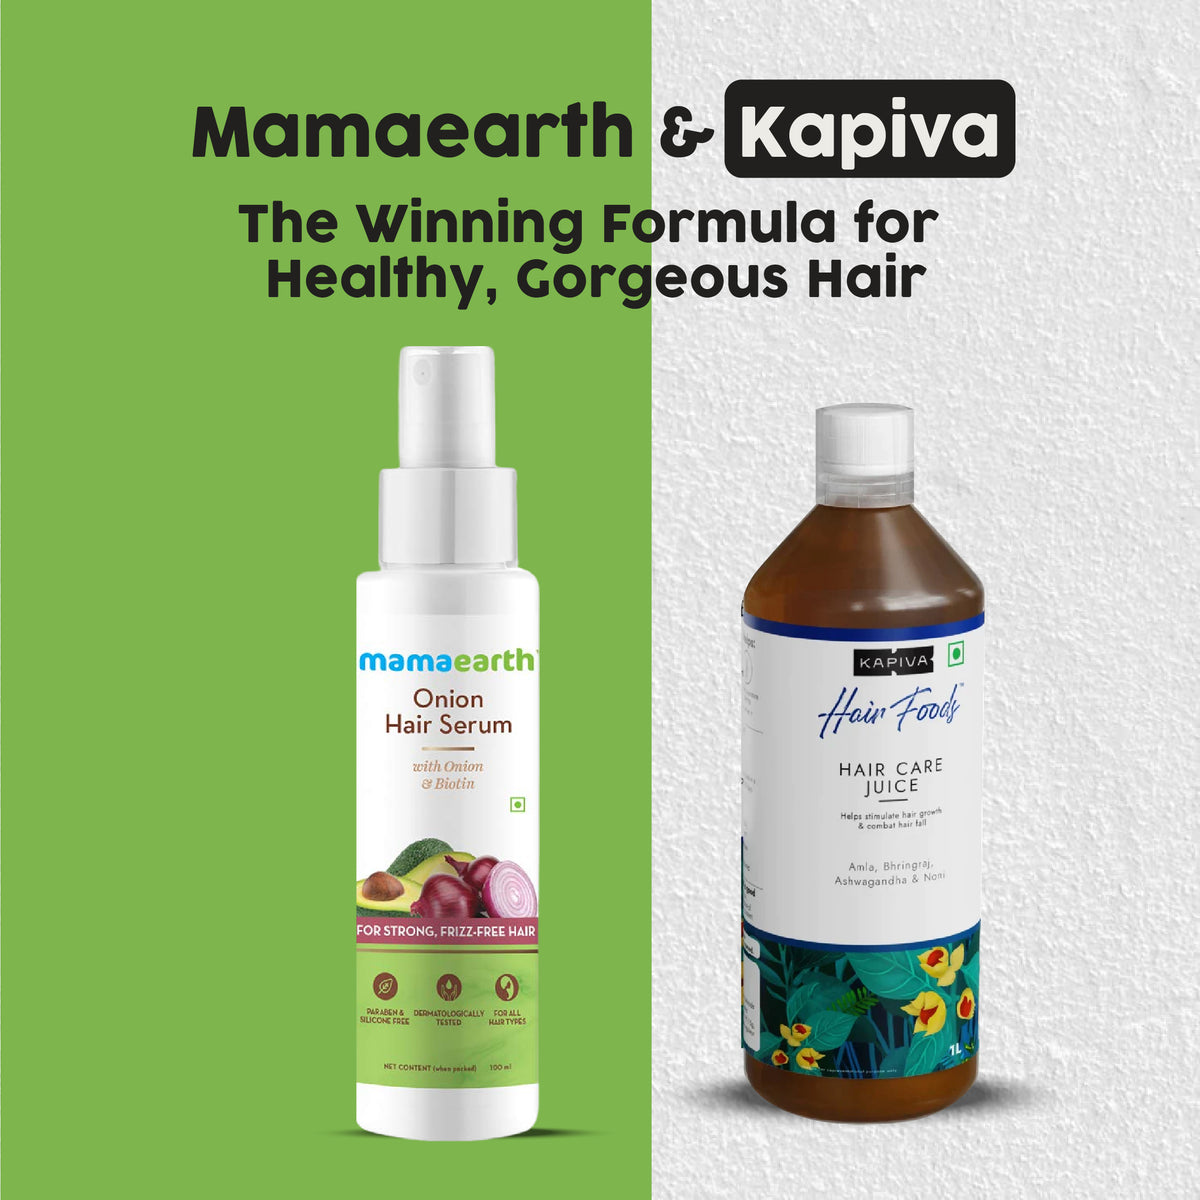 Mamaearth Onion Hair Serum with Onion & Biotin, 100 ml + Kapiva Hair Care Juice 1L